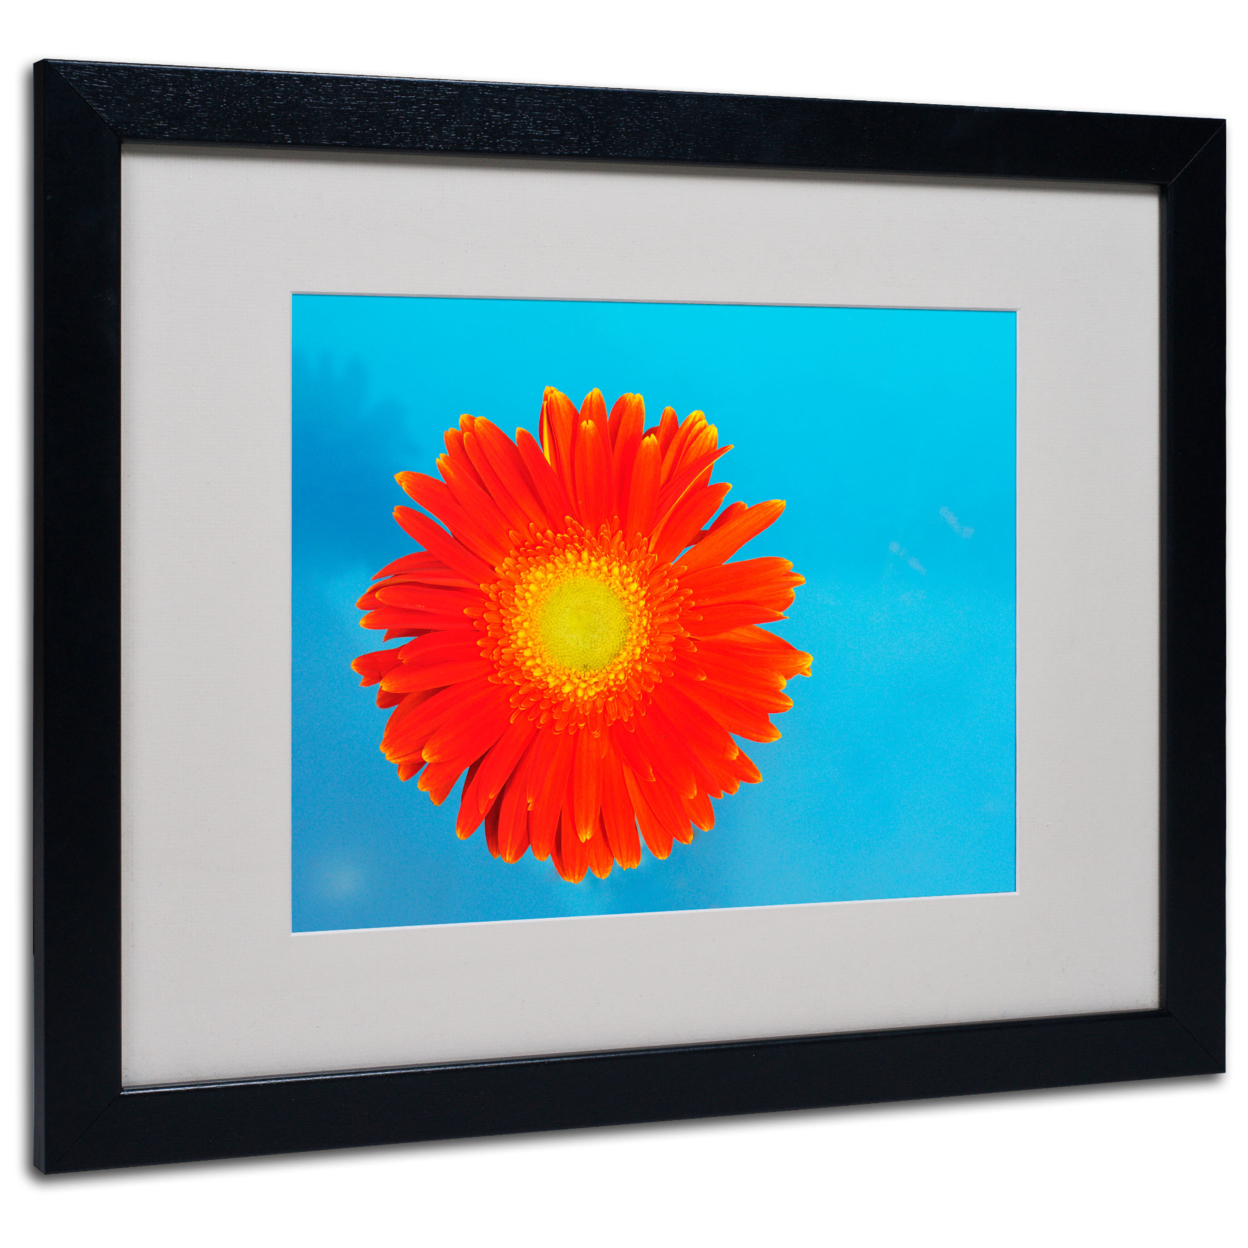 Kurt Shaffer 'Orange And Blue' Black Wooden Framed Art 18 X 22 Inches